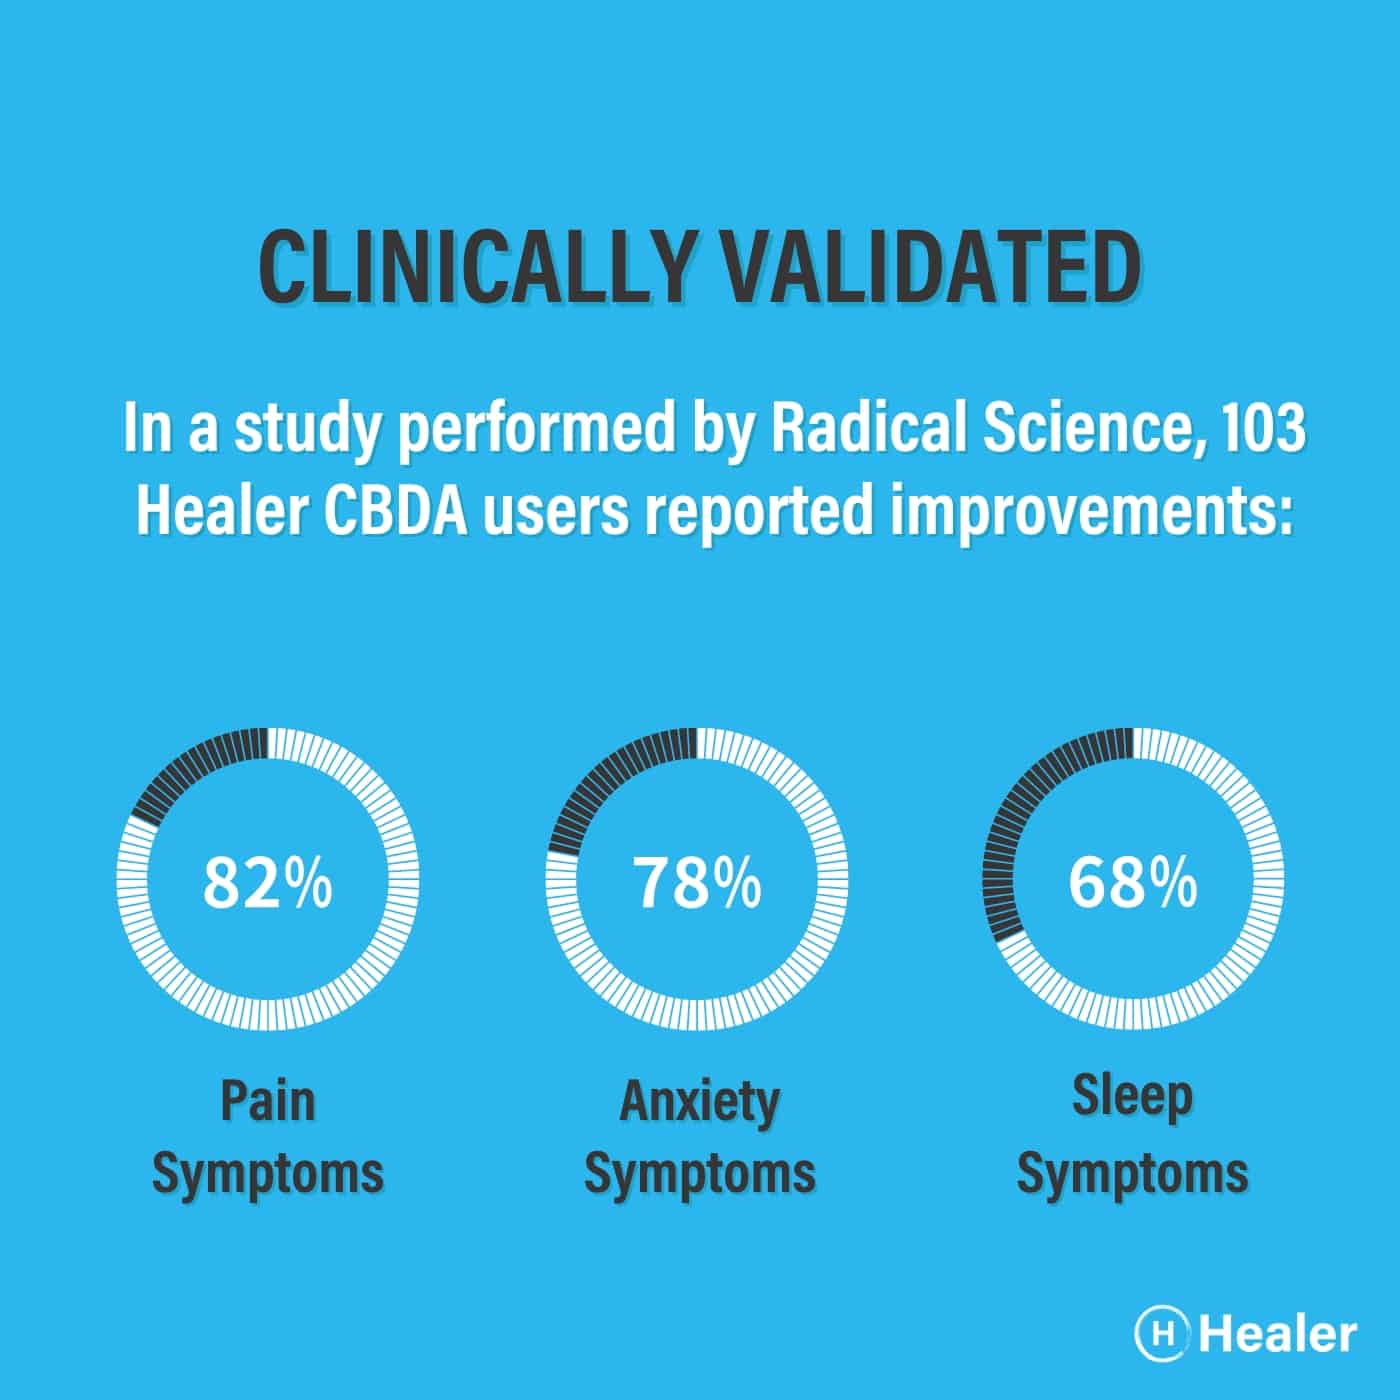 Healer CBDA is clinically validated